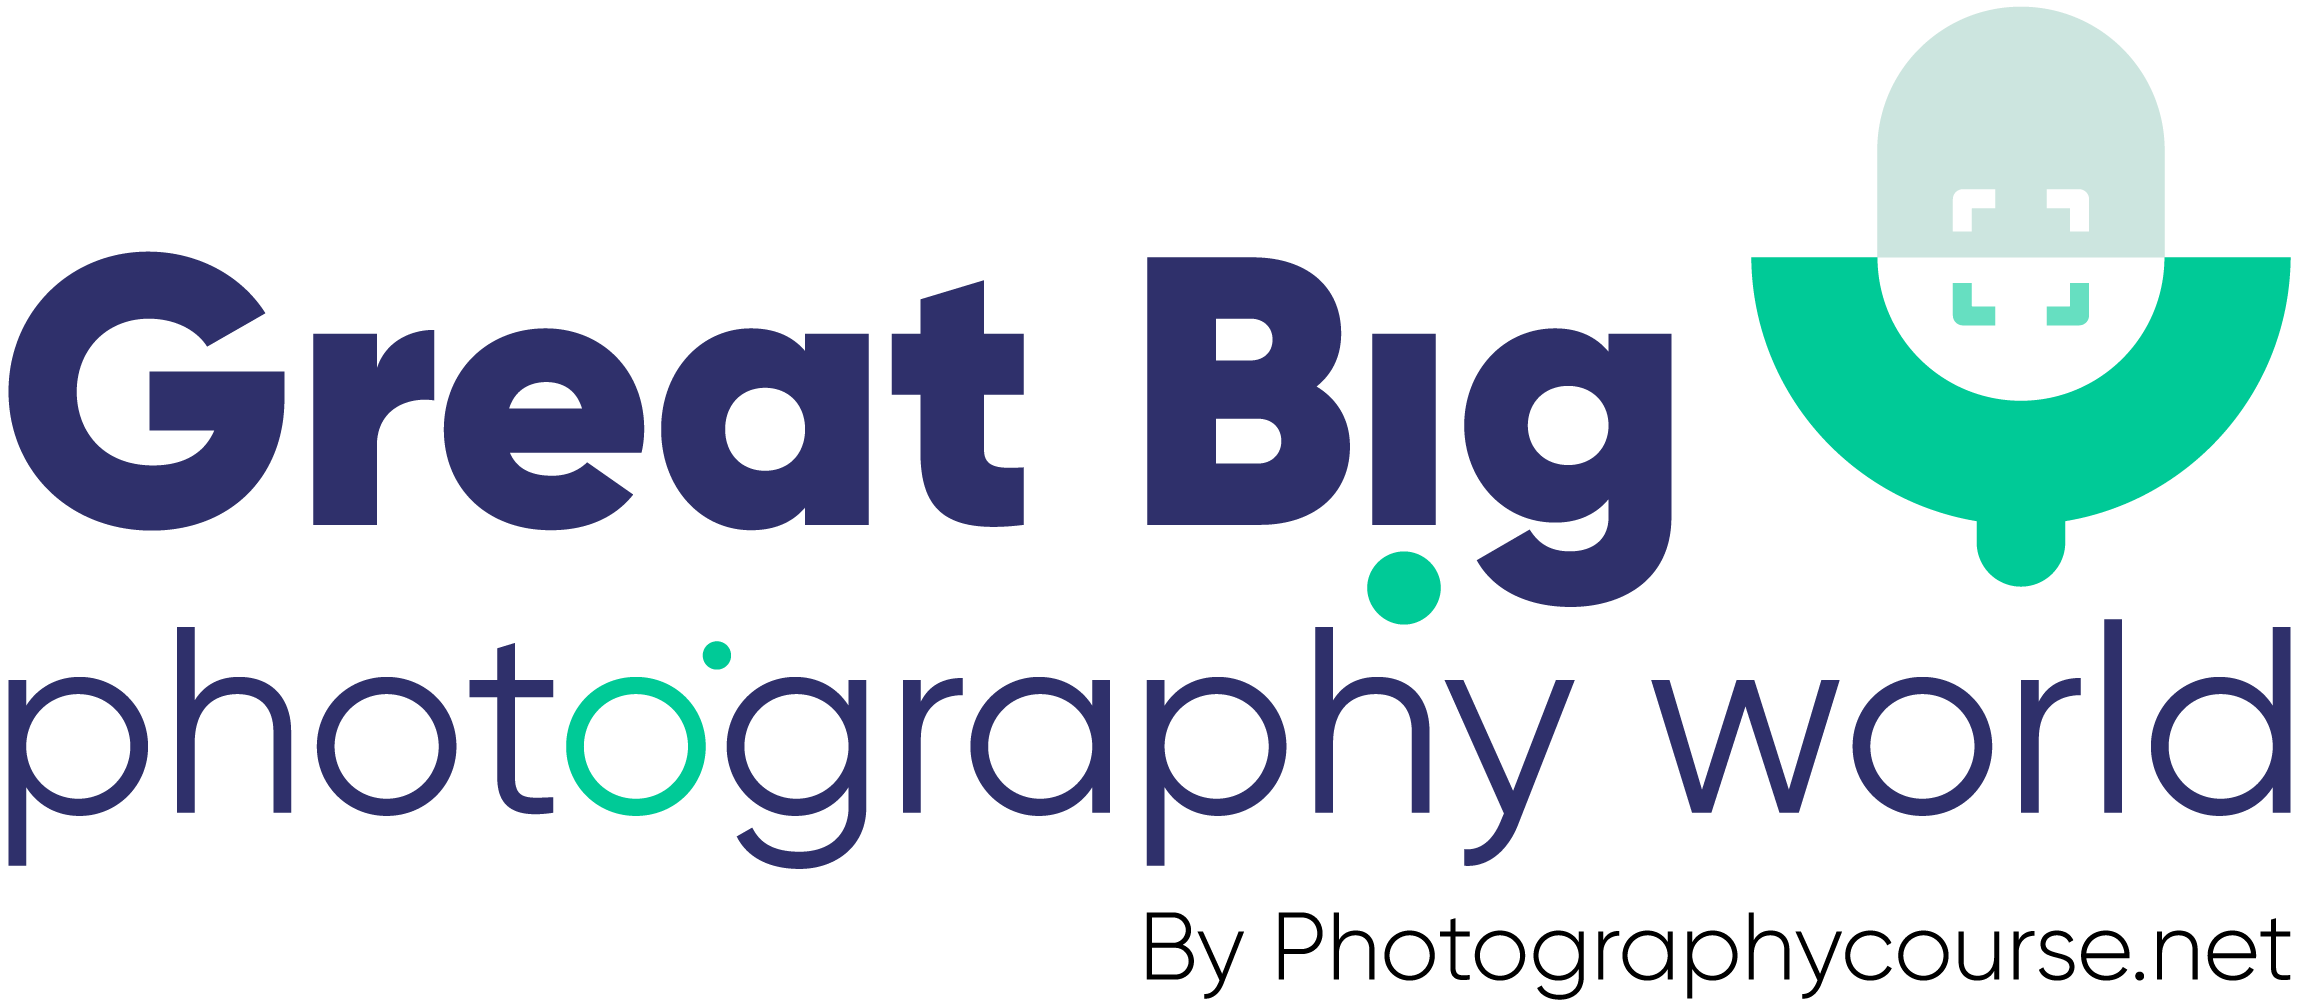 great big photography world logo.